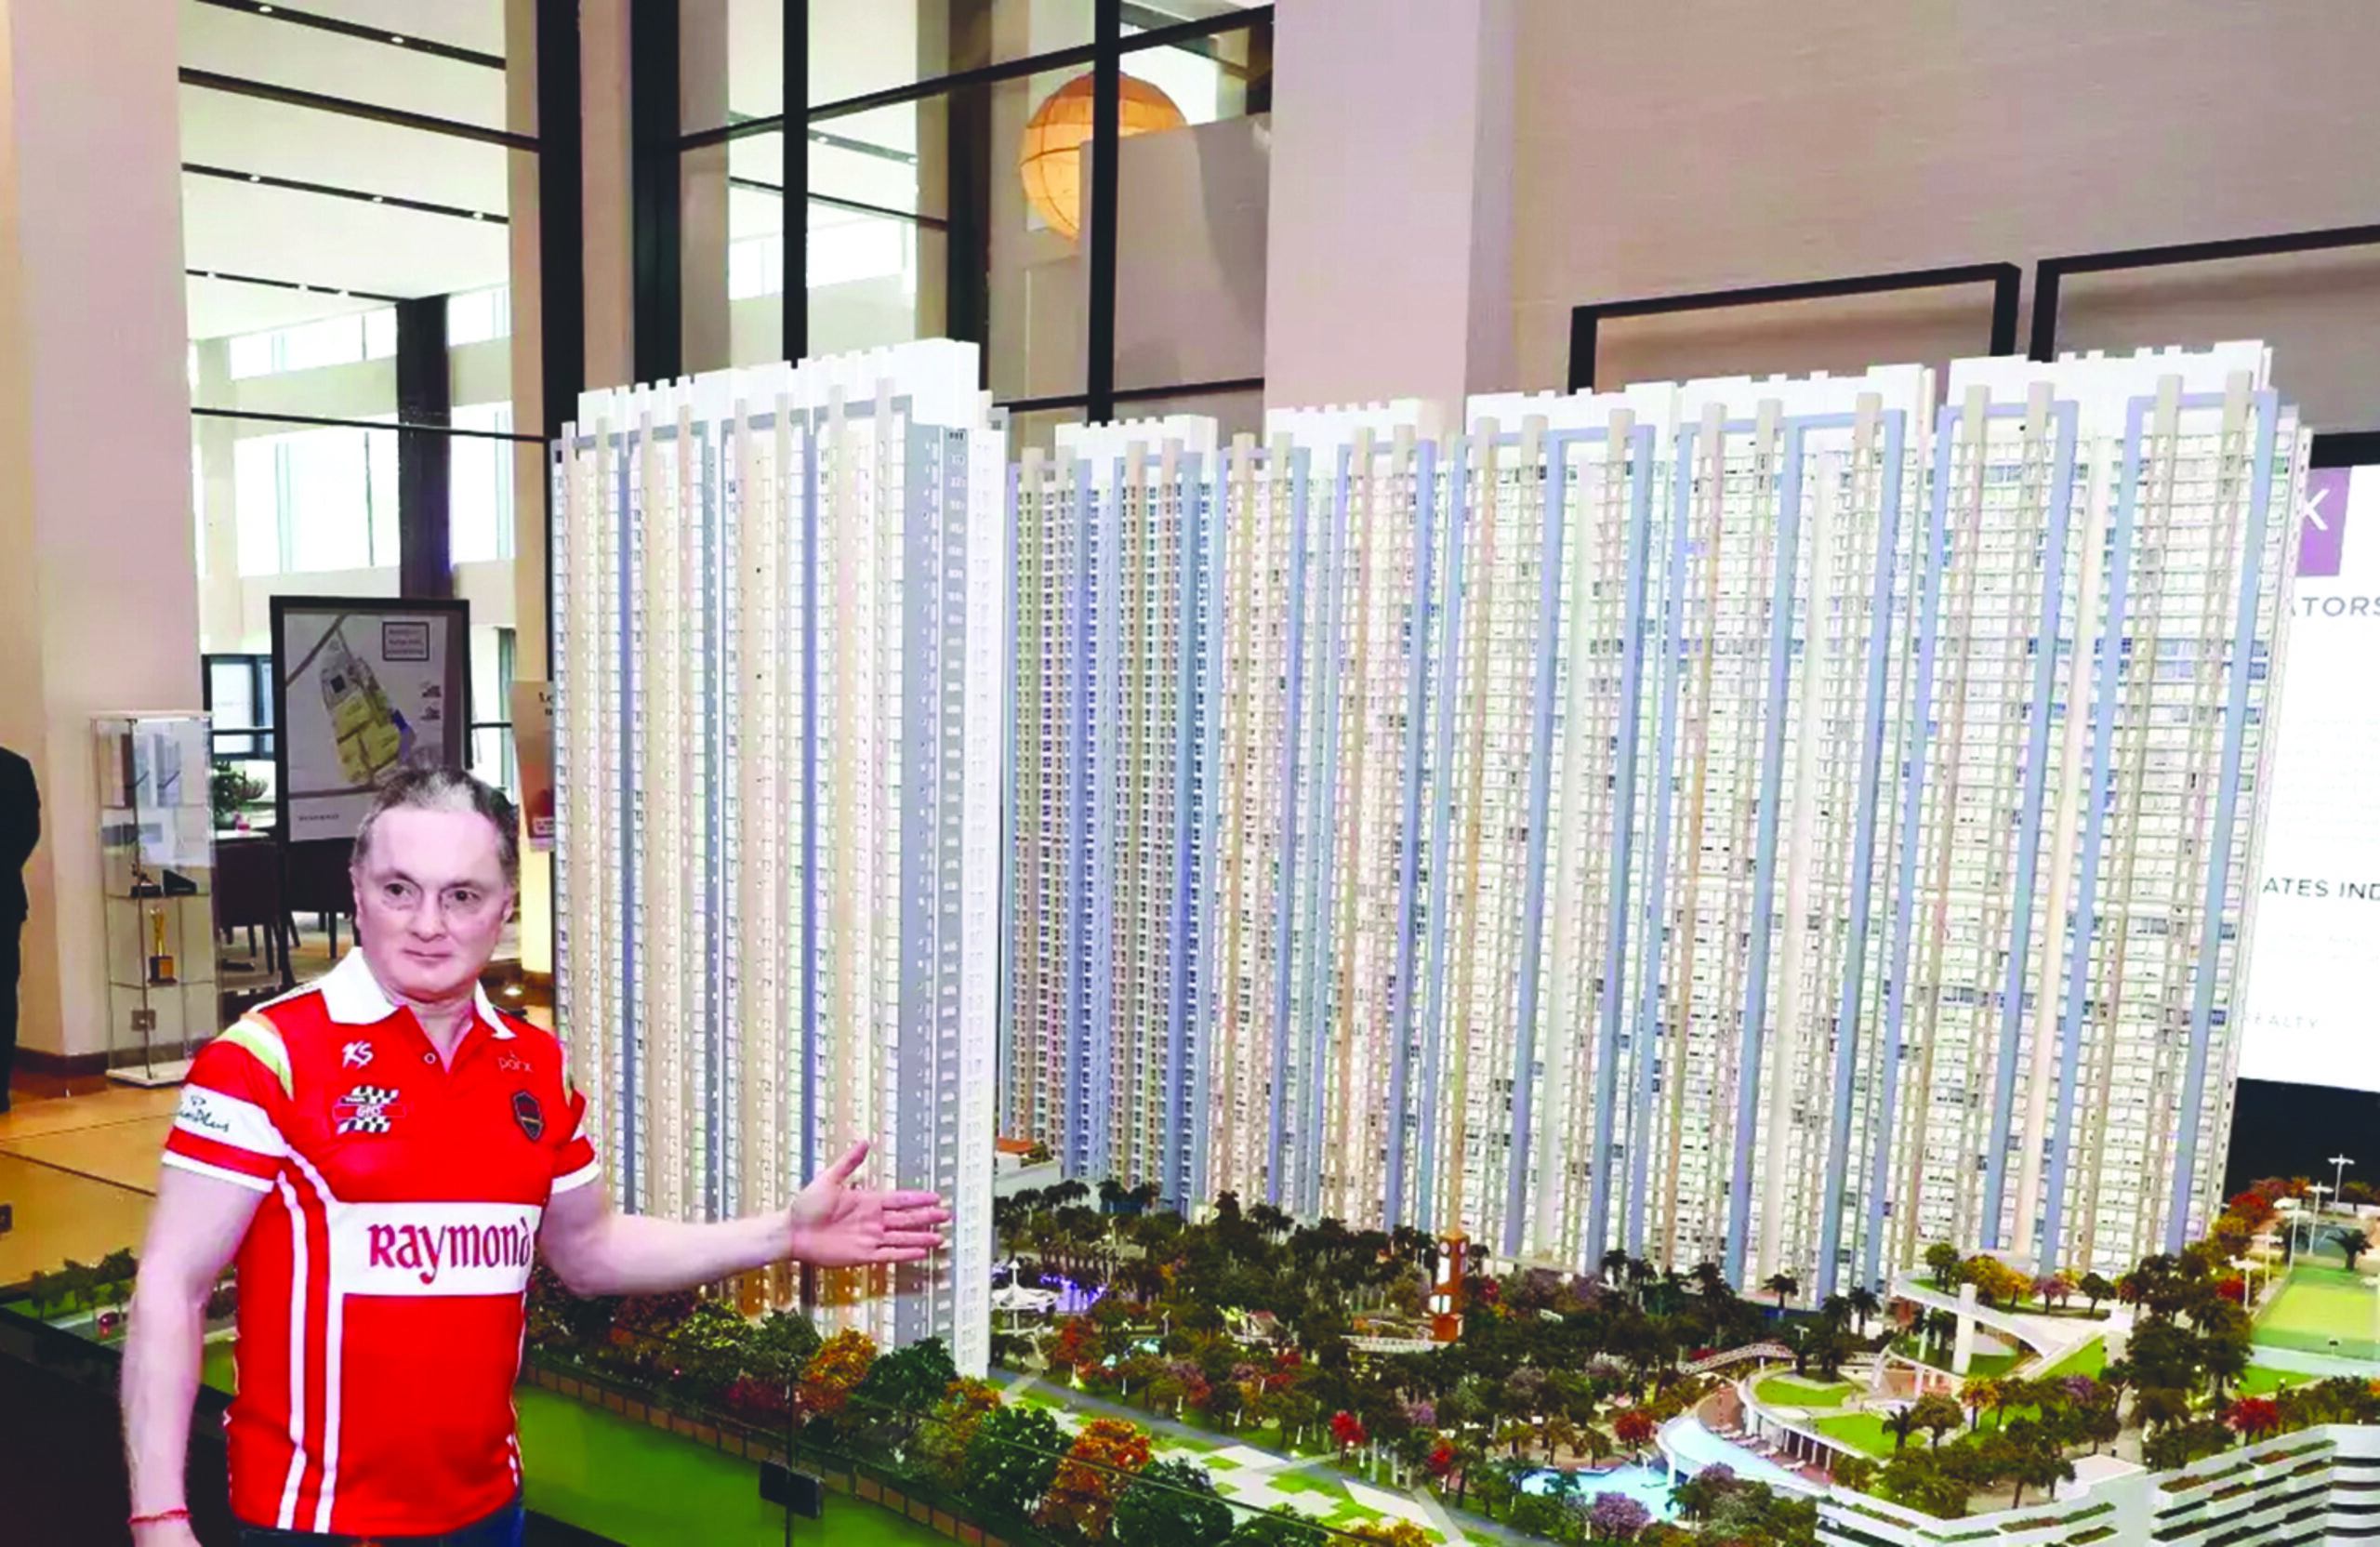 Raymond Realty’s TenX Habitat Project in Thane Sells Units Worth 147 crores